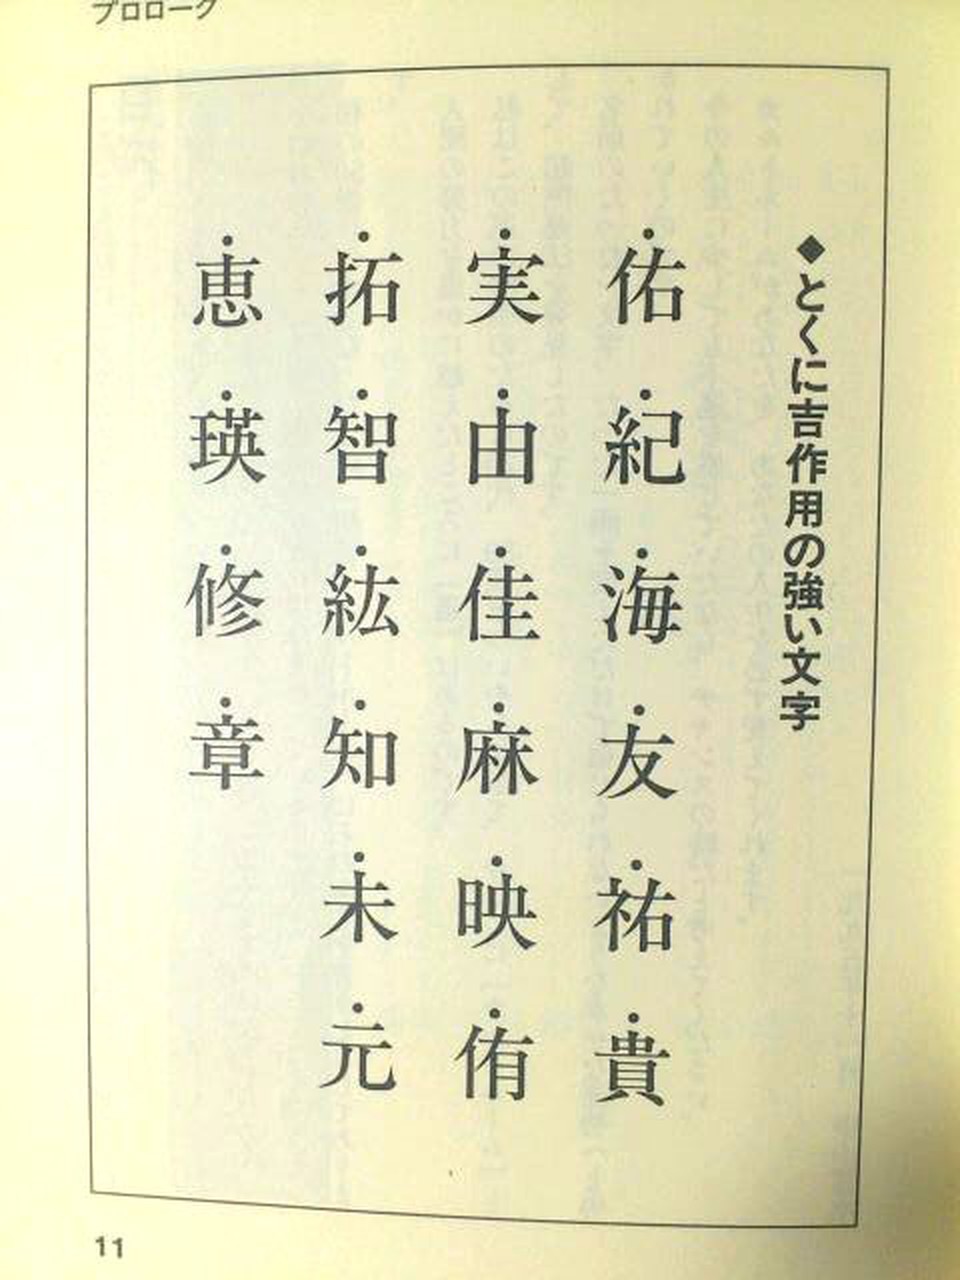 5dd0a11903529 - Японские пословицы в иероглифах